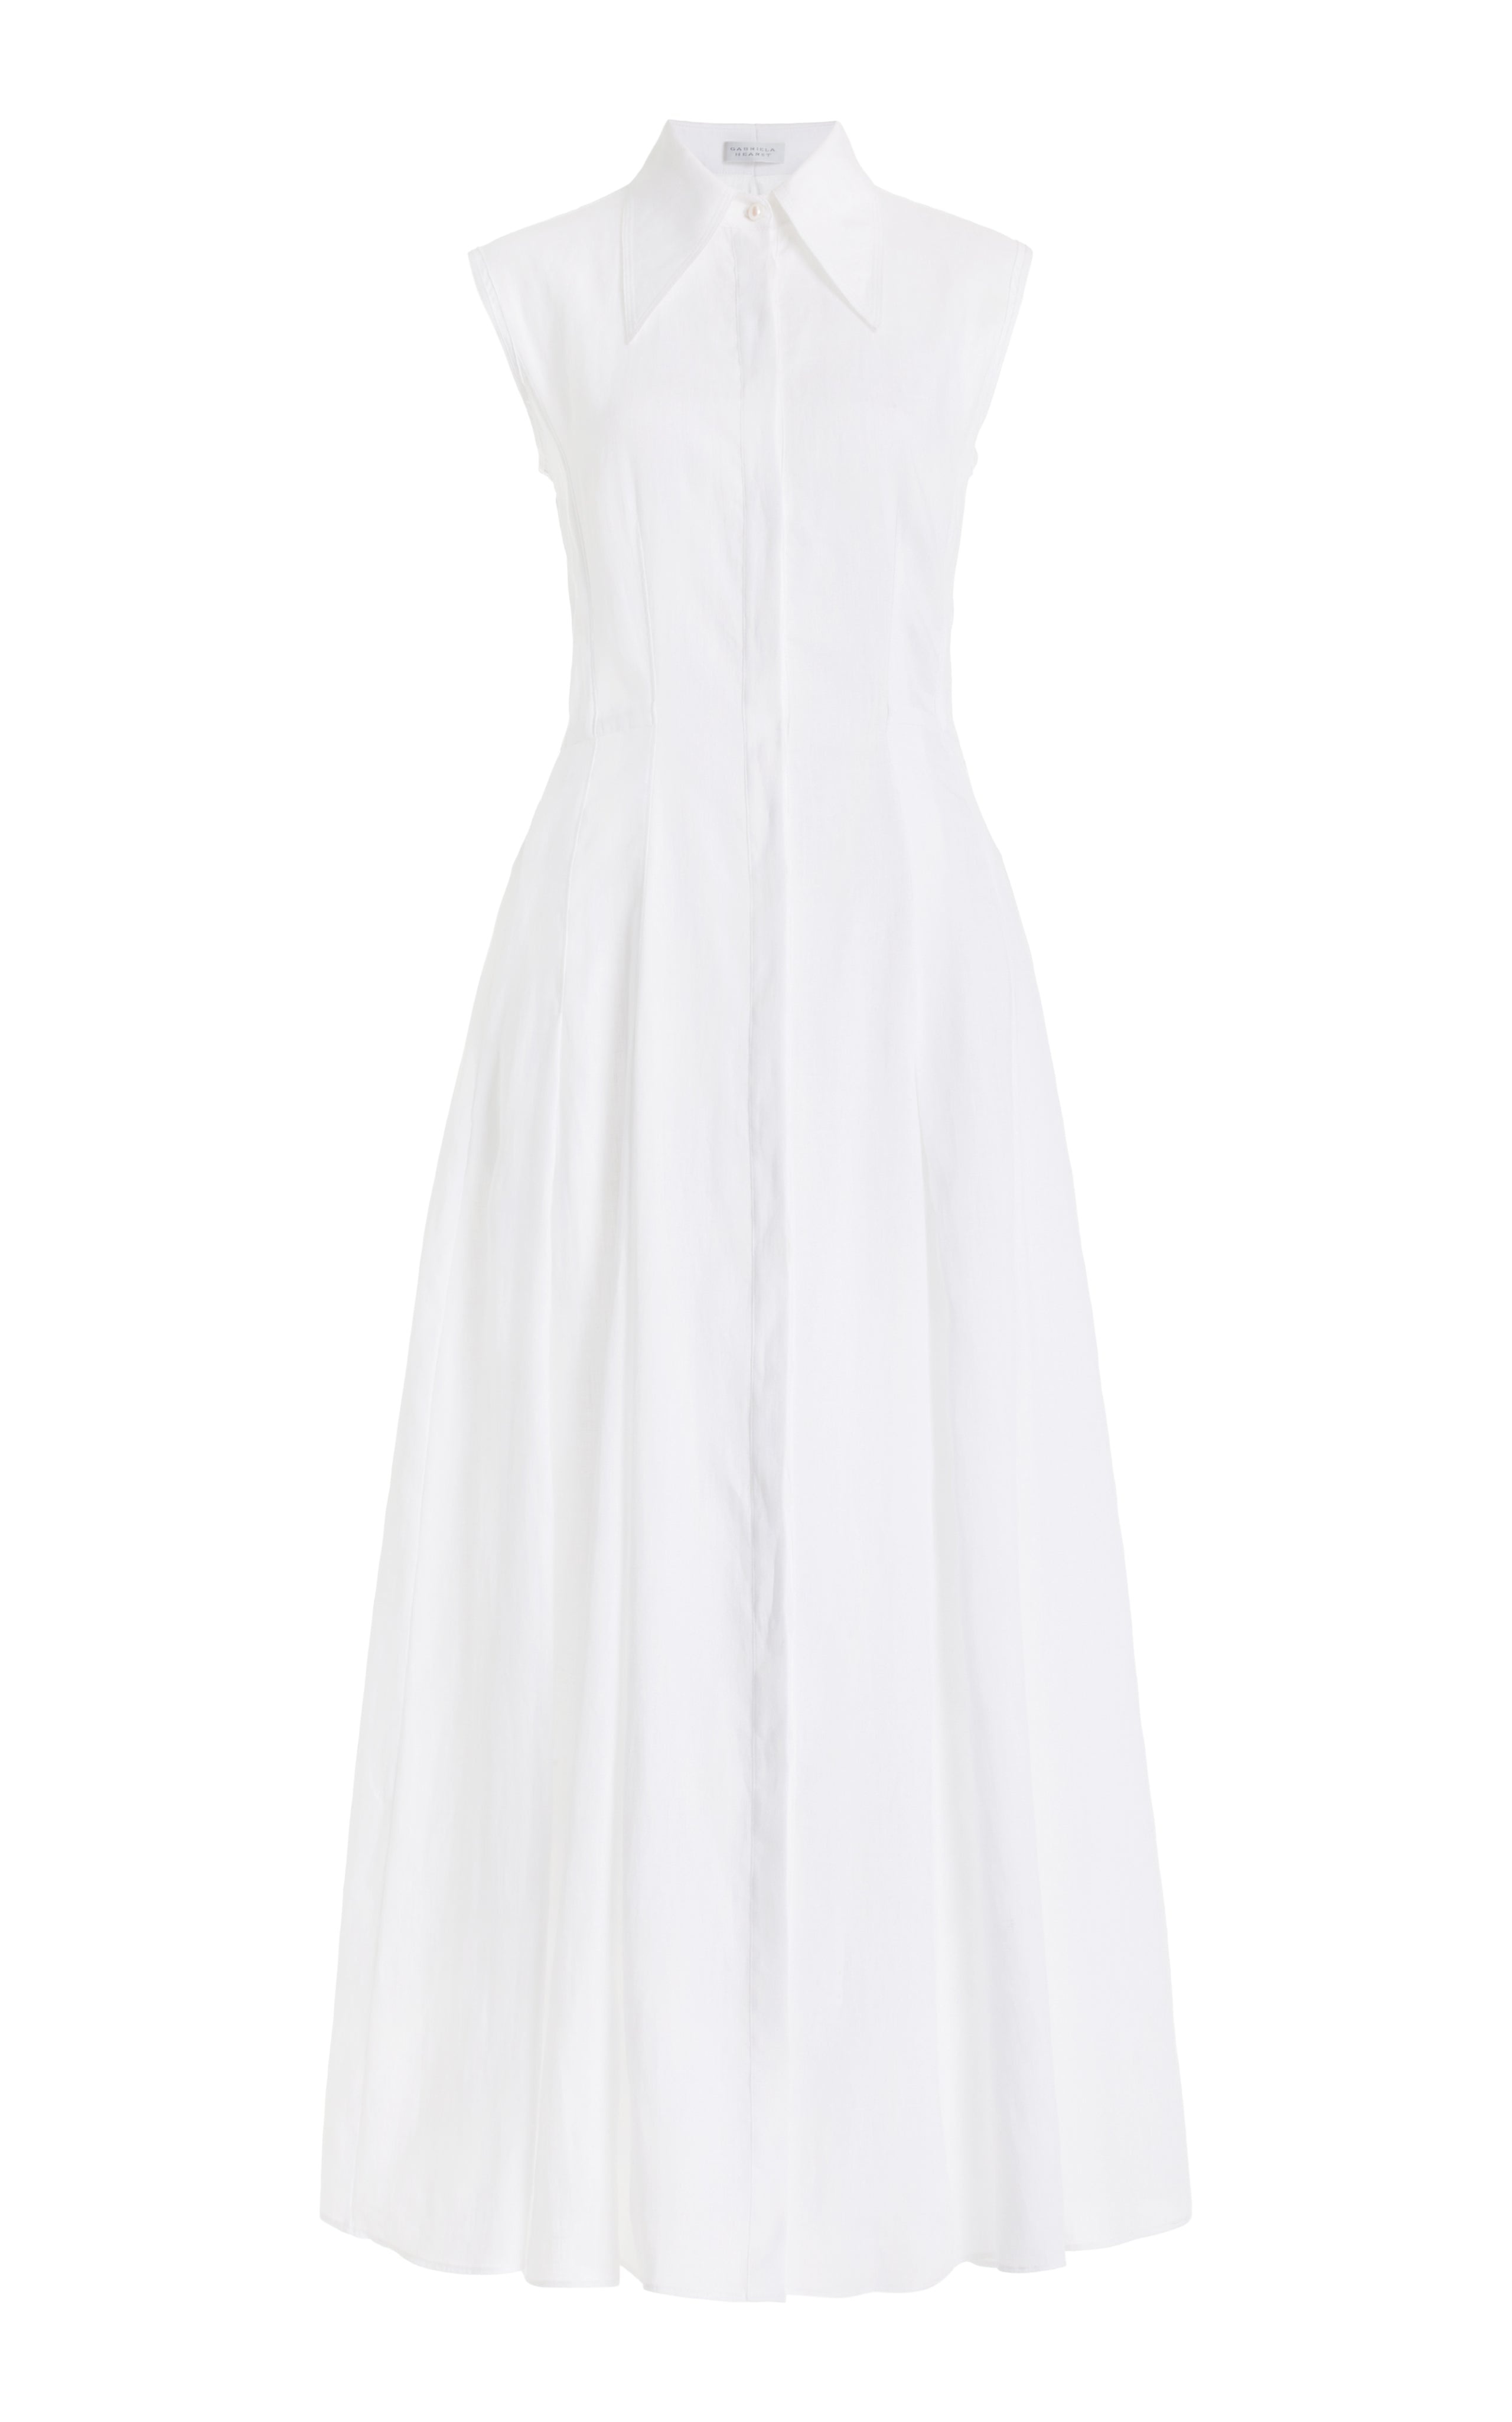 Durand Shirt Dress in White Aloe Linen - 1